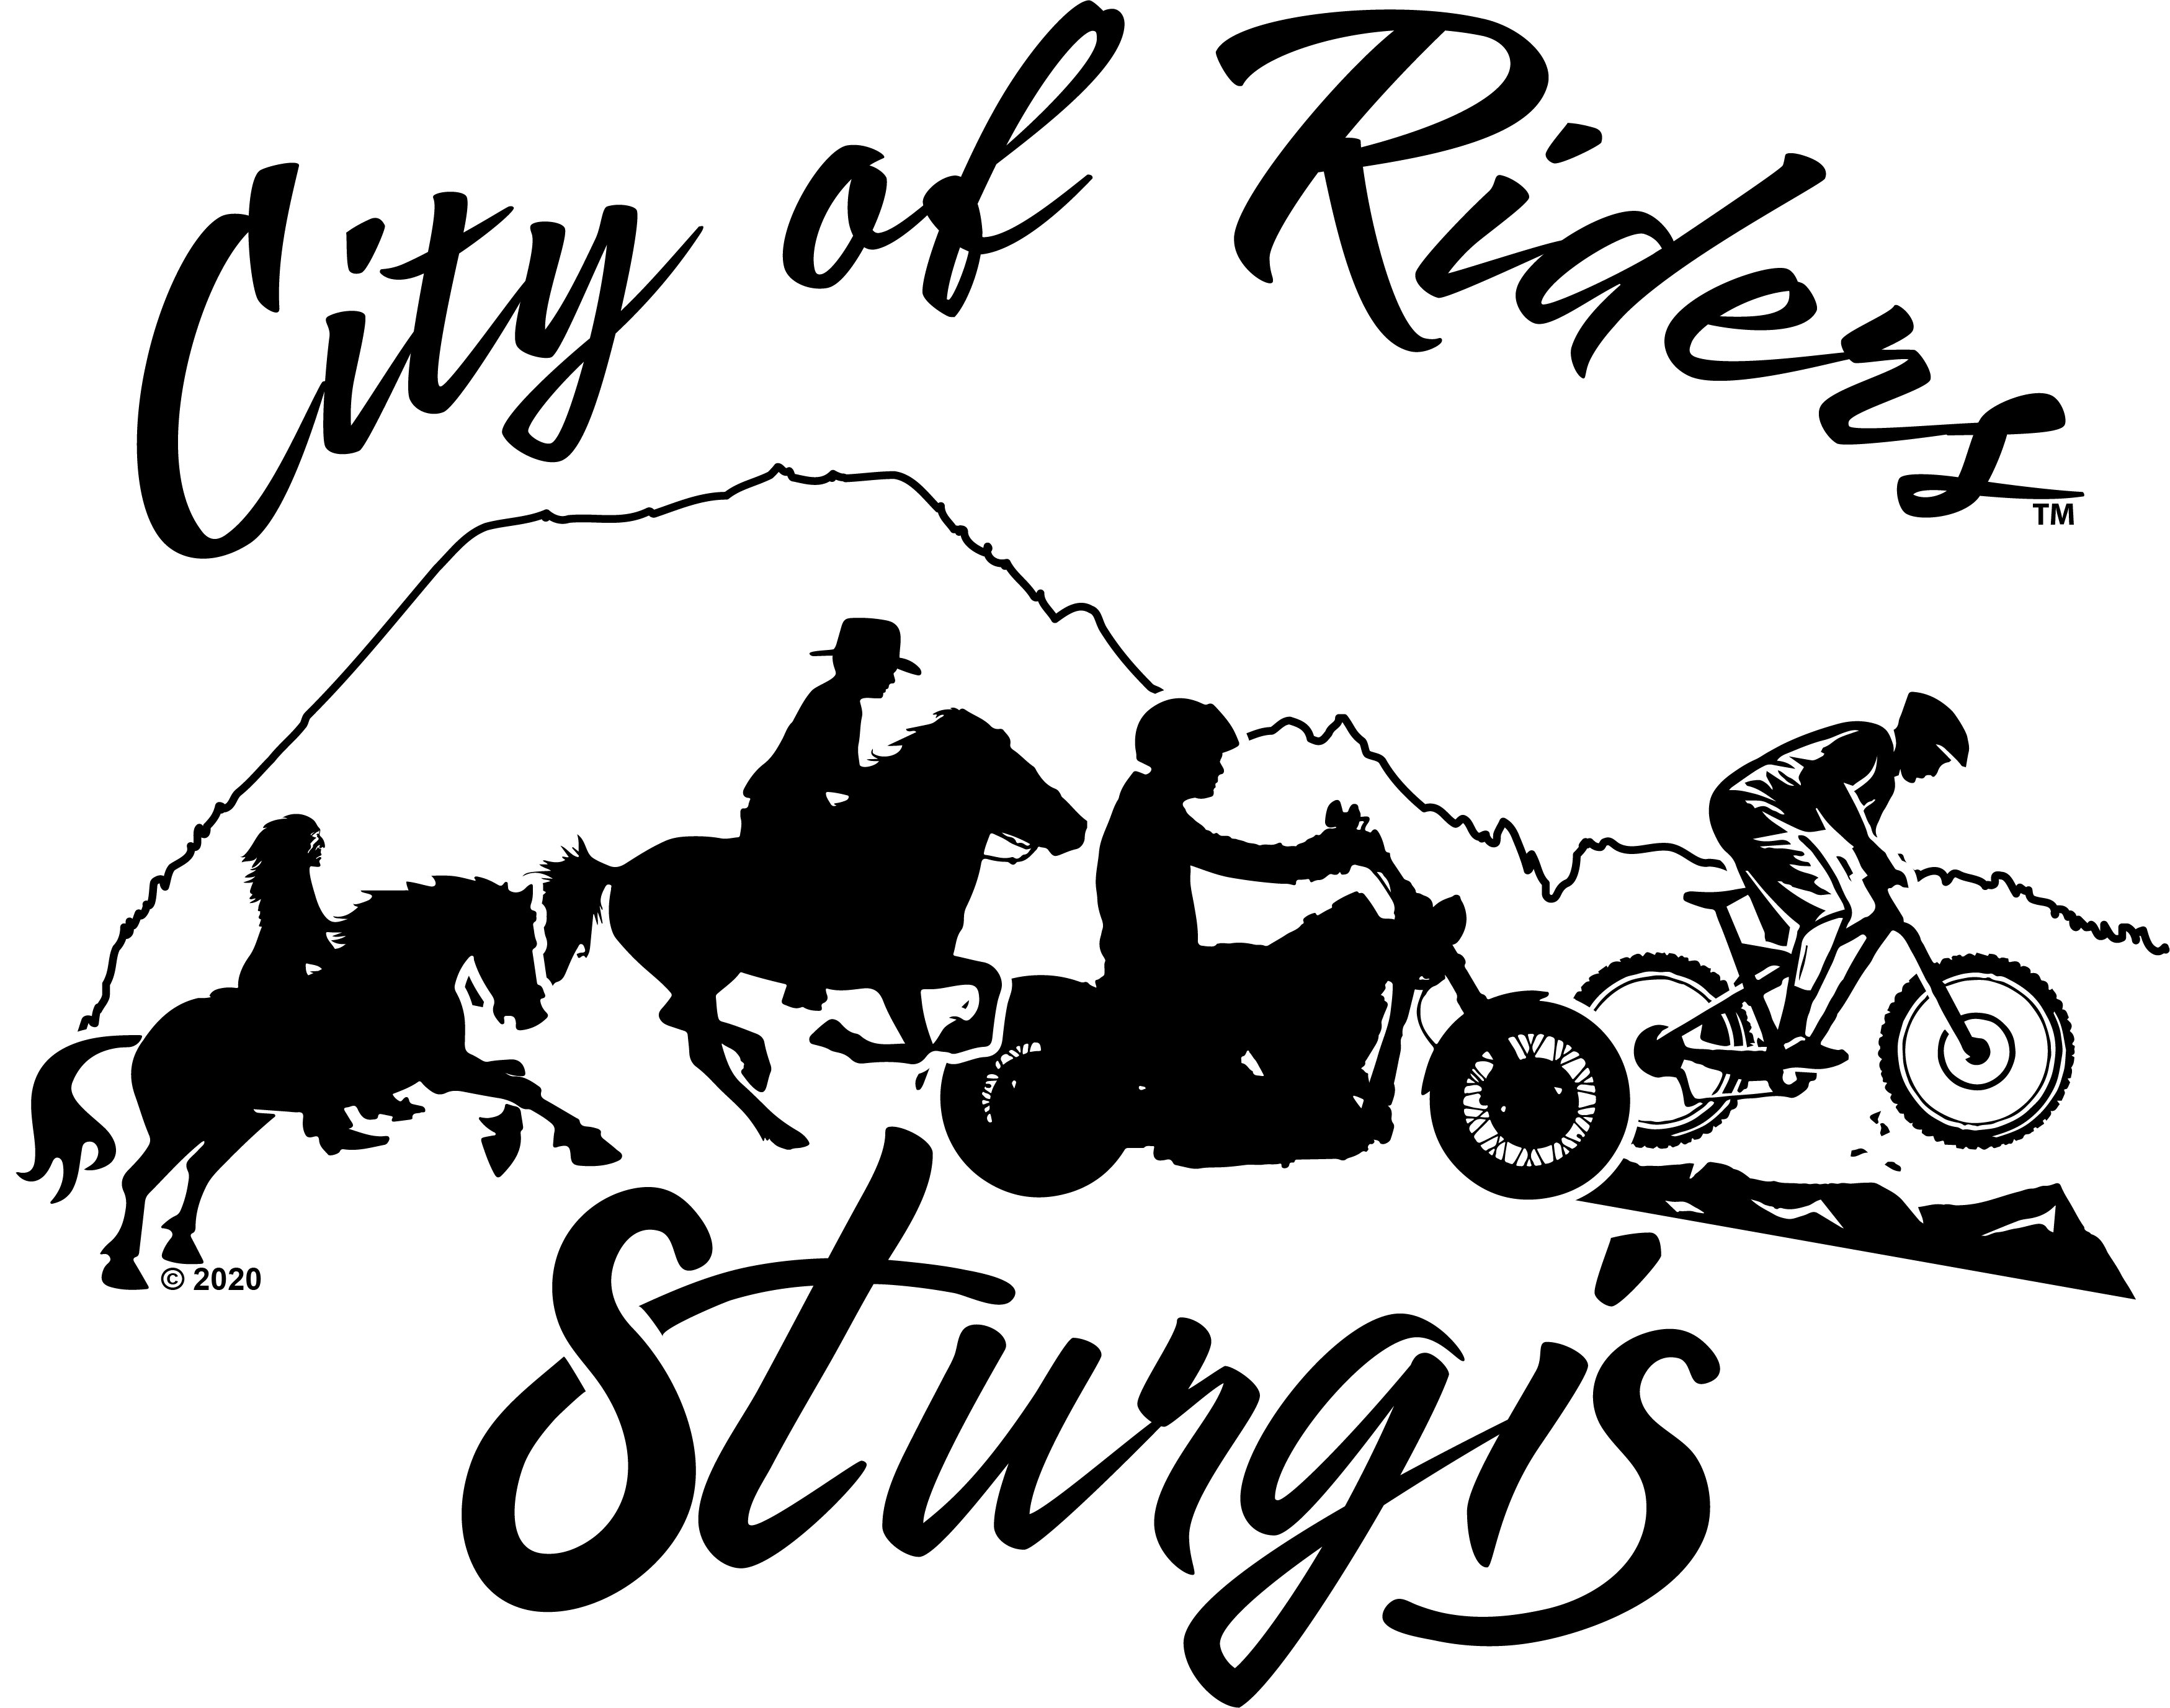 City of Riders. Sturgis